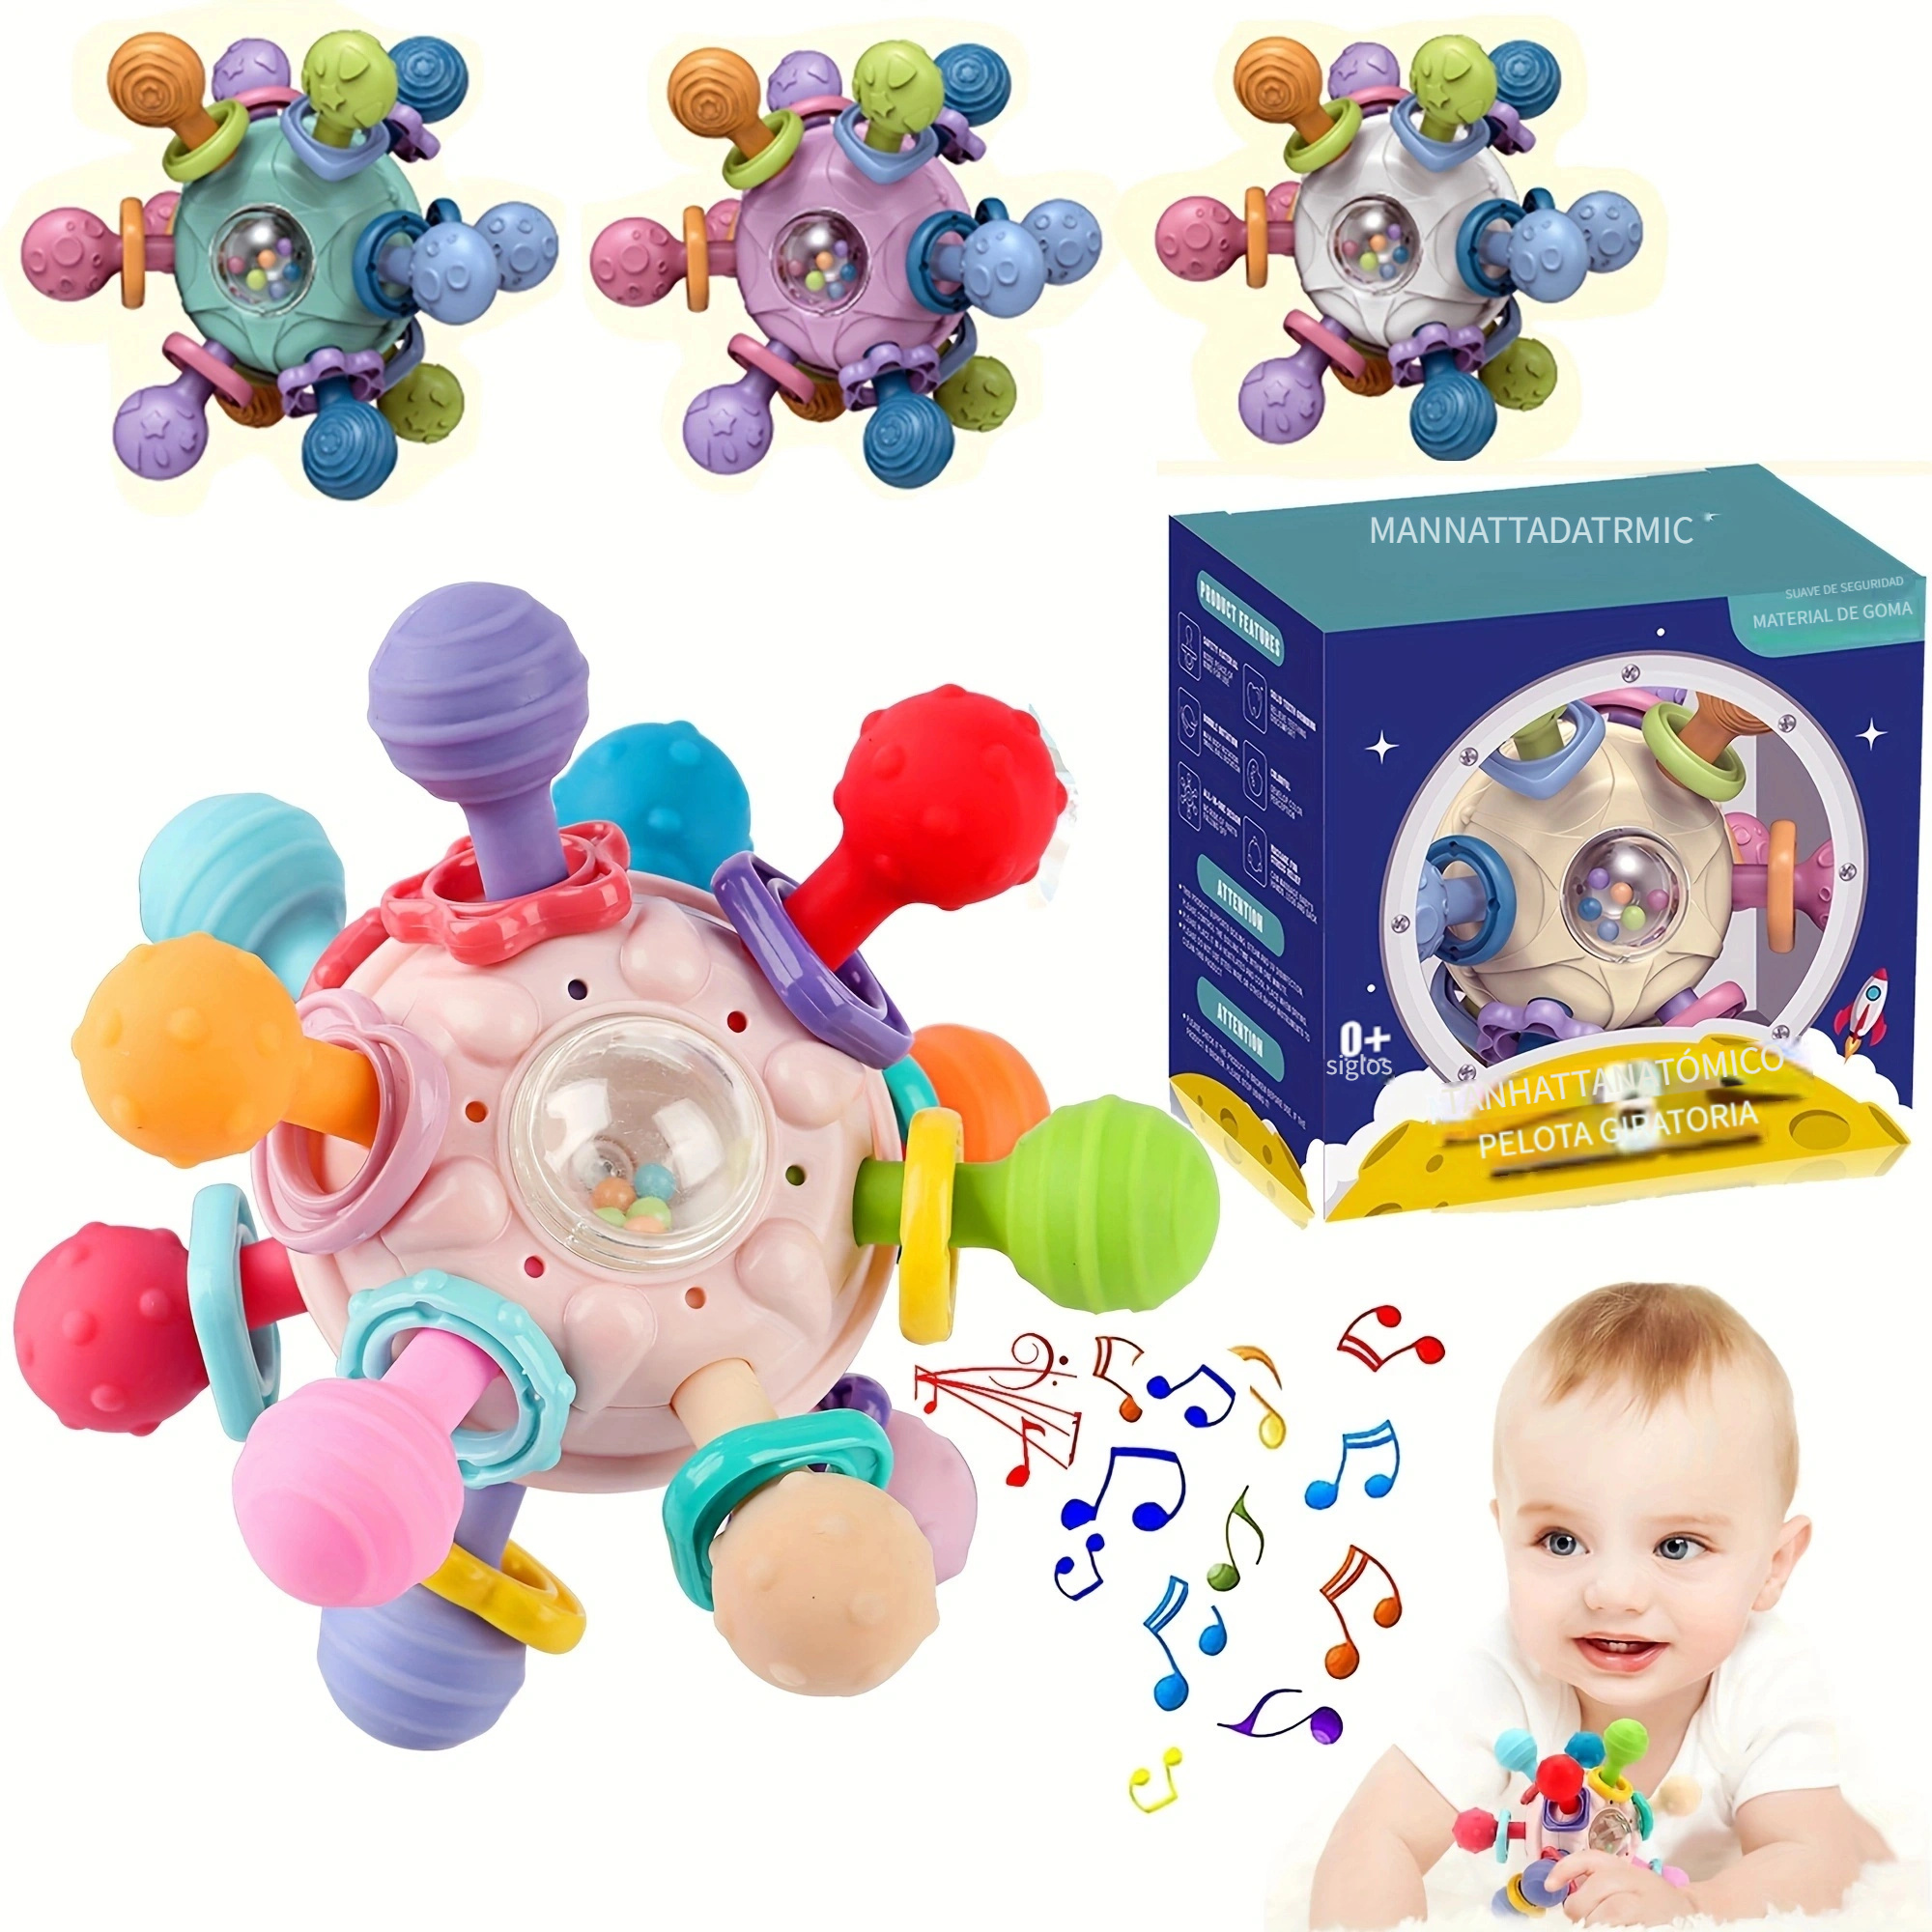  Libros para bebés de 0 a 6 meses, juguetes arrugados, juguetes  para bebés de 0 a 3 meses para regalo de ducha de niño/niña, para recién  nacido, sensorial, Montessori, alto contraste